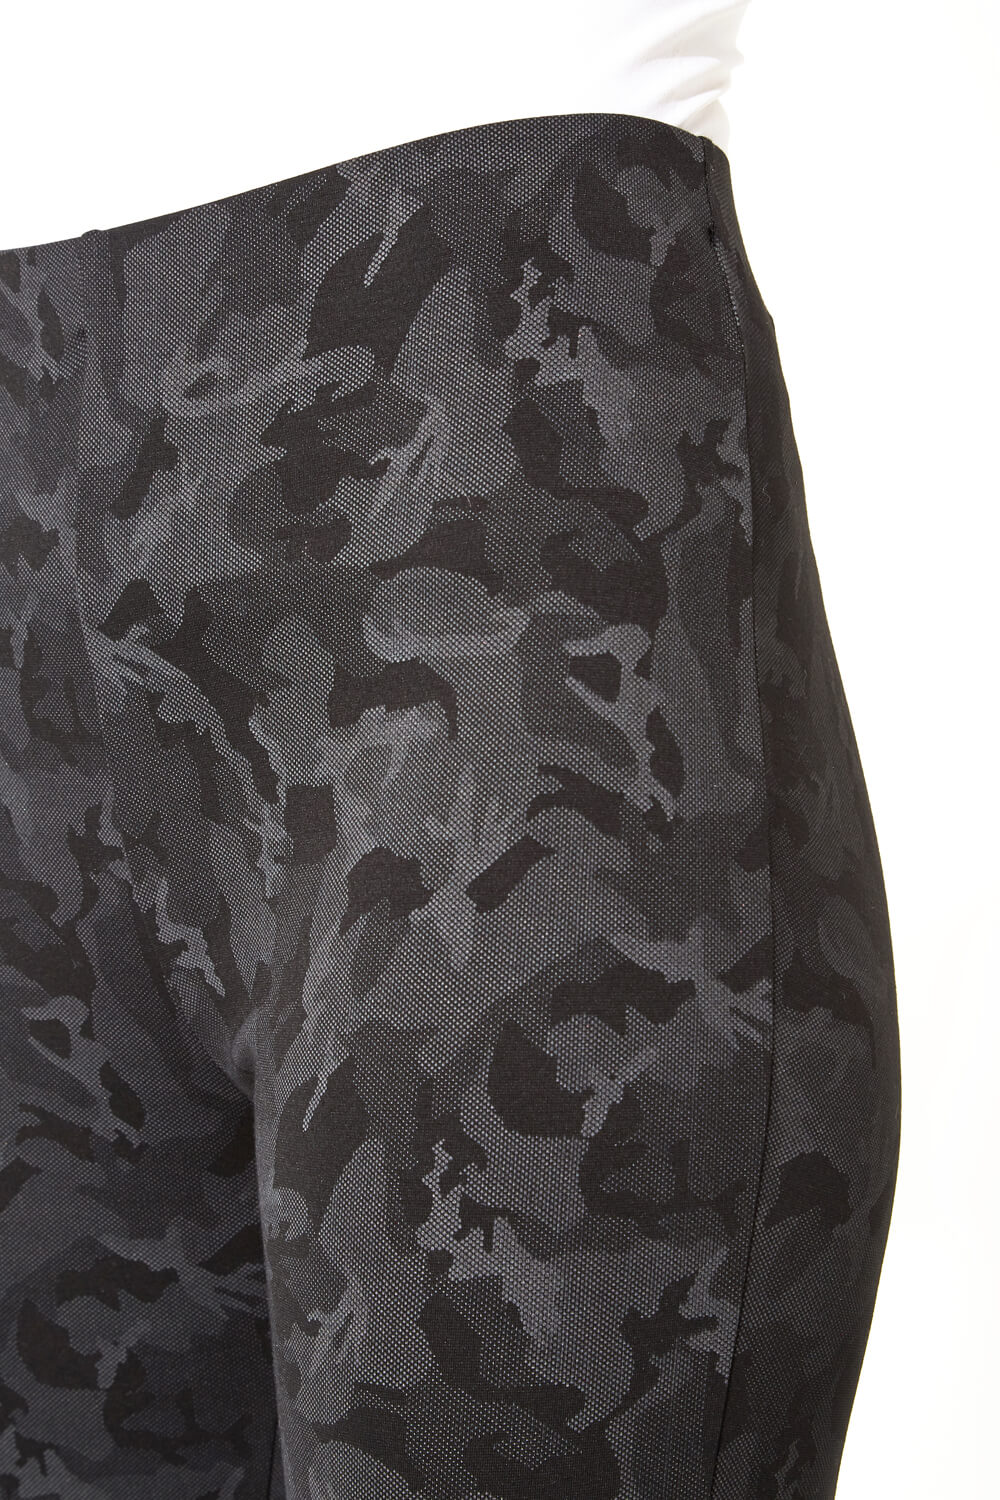 Camo Print Full Length Stretch Trousers in Black - Roman Originals UK